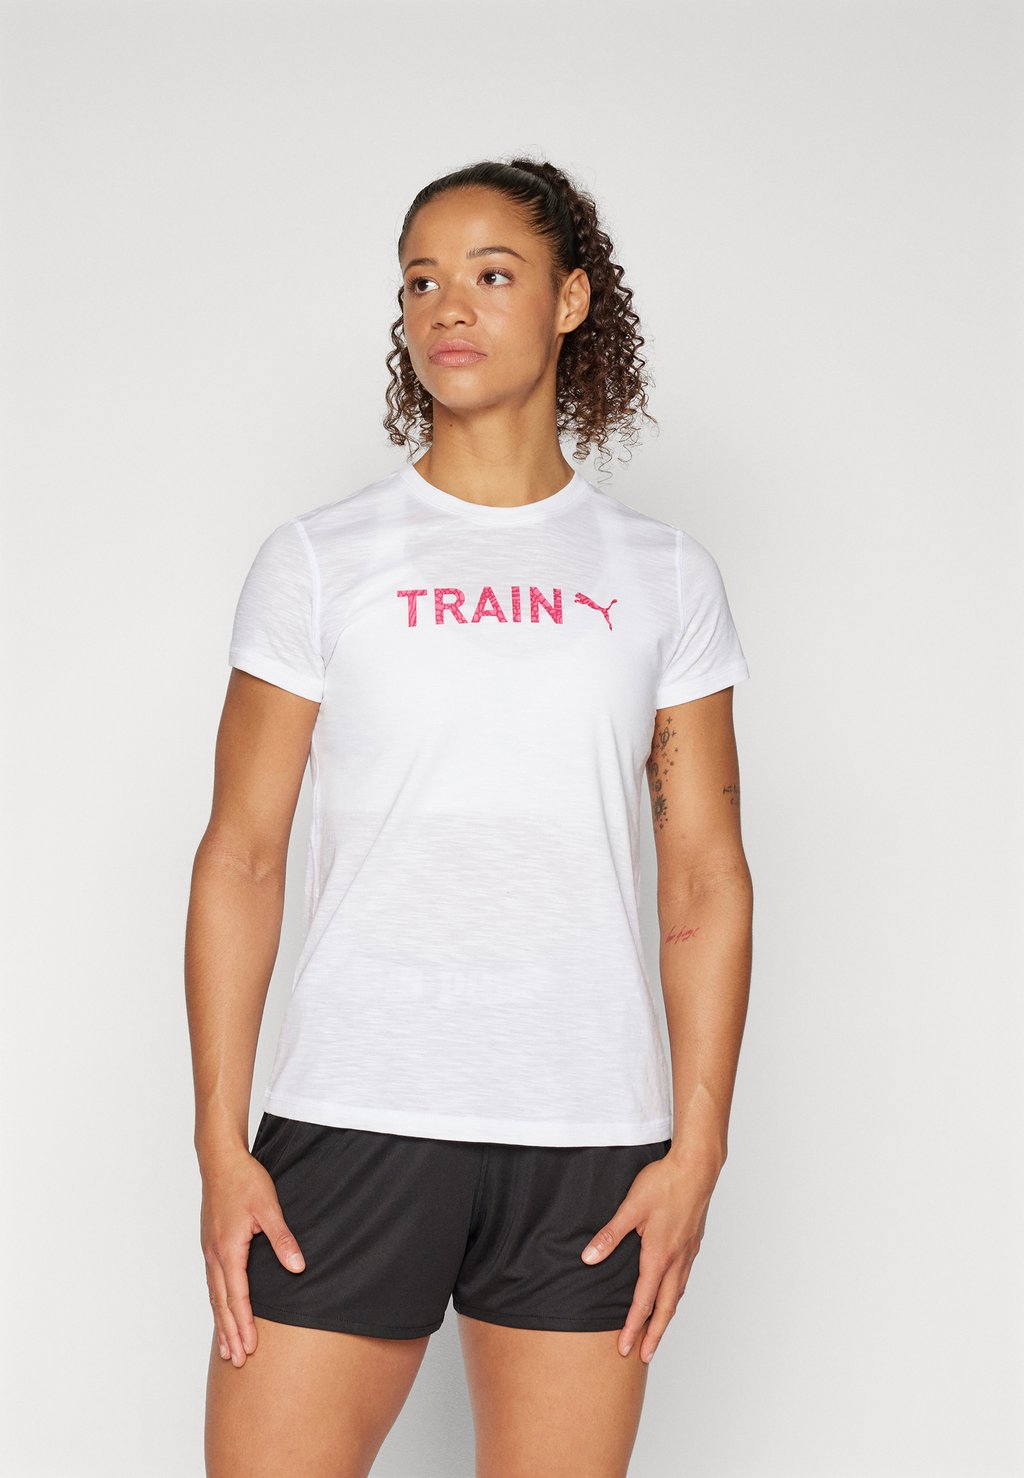 Спортивная футболка WOMEN'S GRAPHIC TEE TRAIN Puma, цвет white спортивная футболка train cat tee puma цвет olive green heather